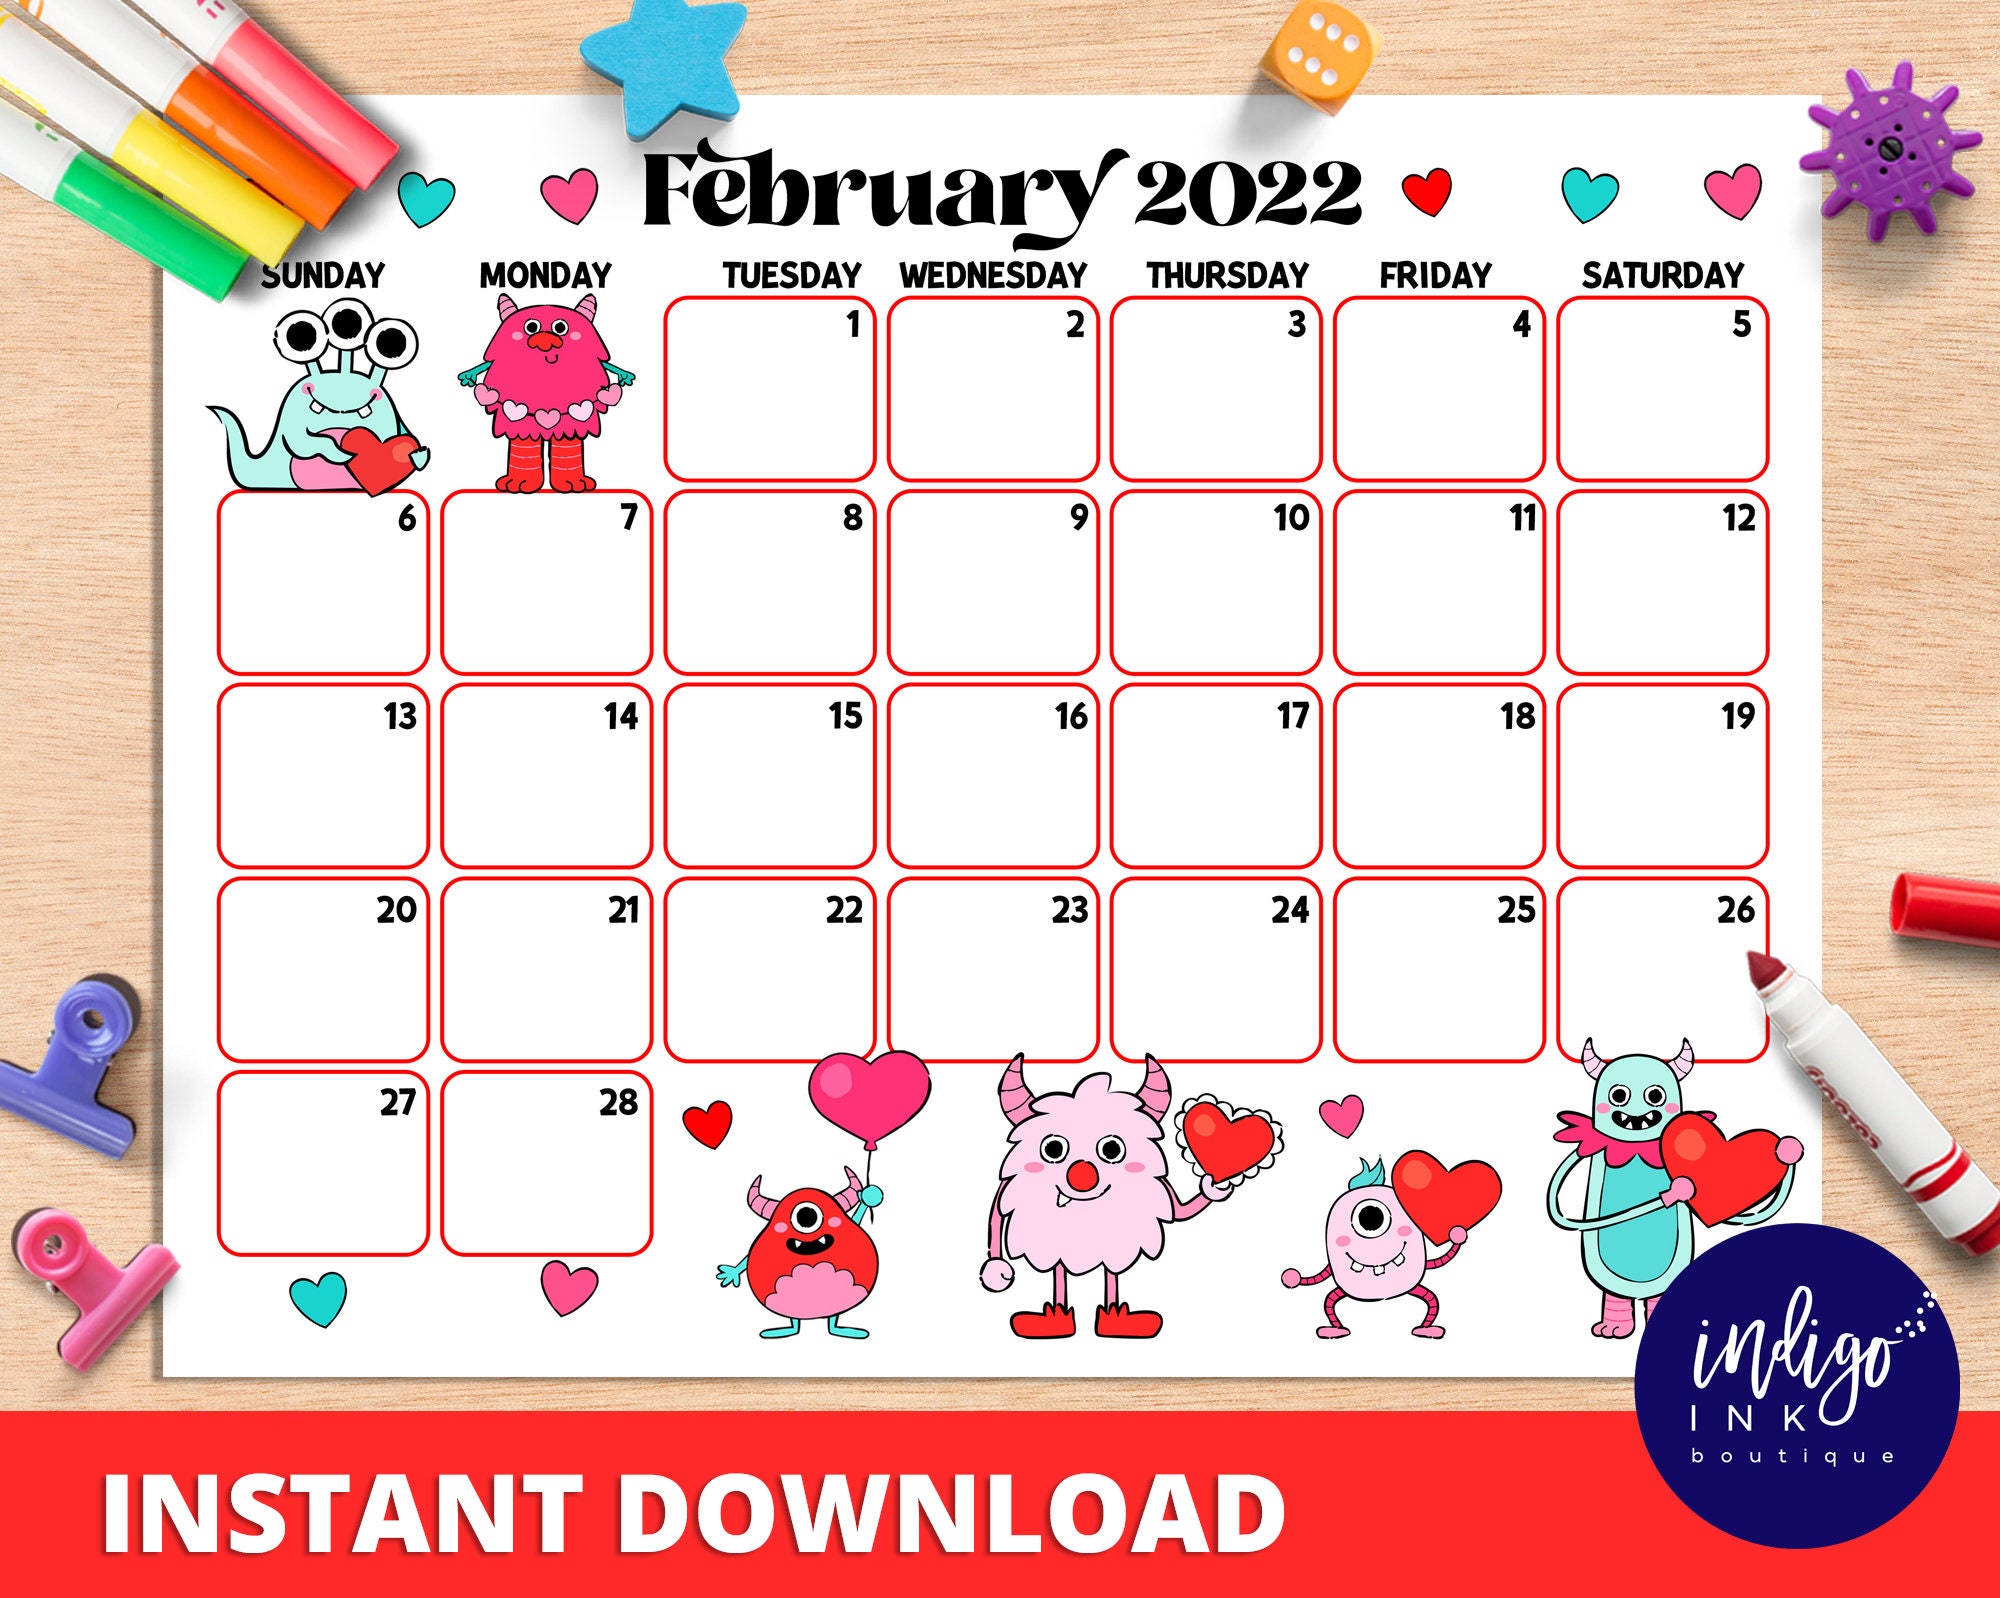 February 2022 Calendar Printable February 2022 Calendar Instant Download Monthly Planner | Etsy Singapore